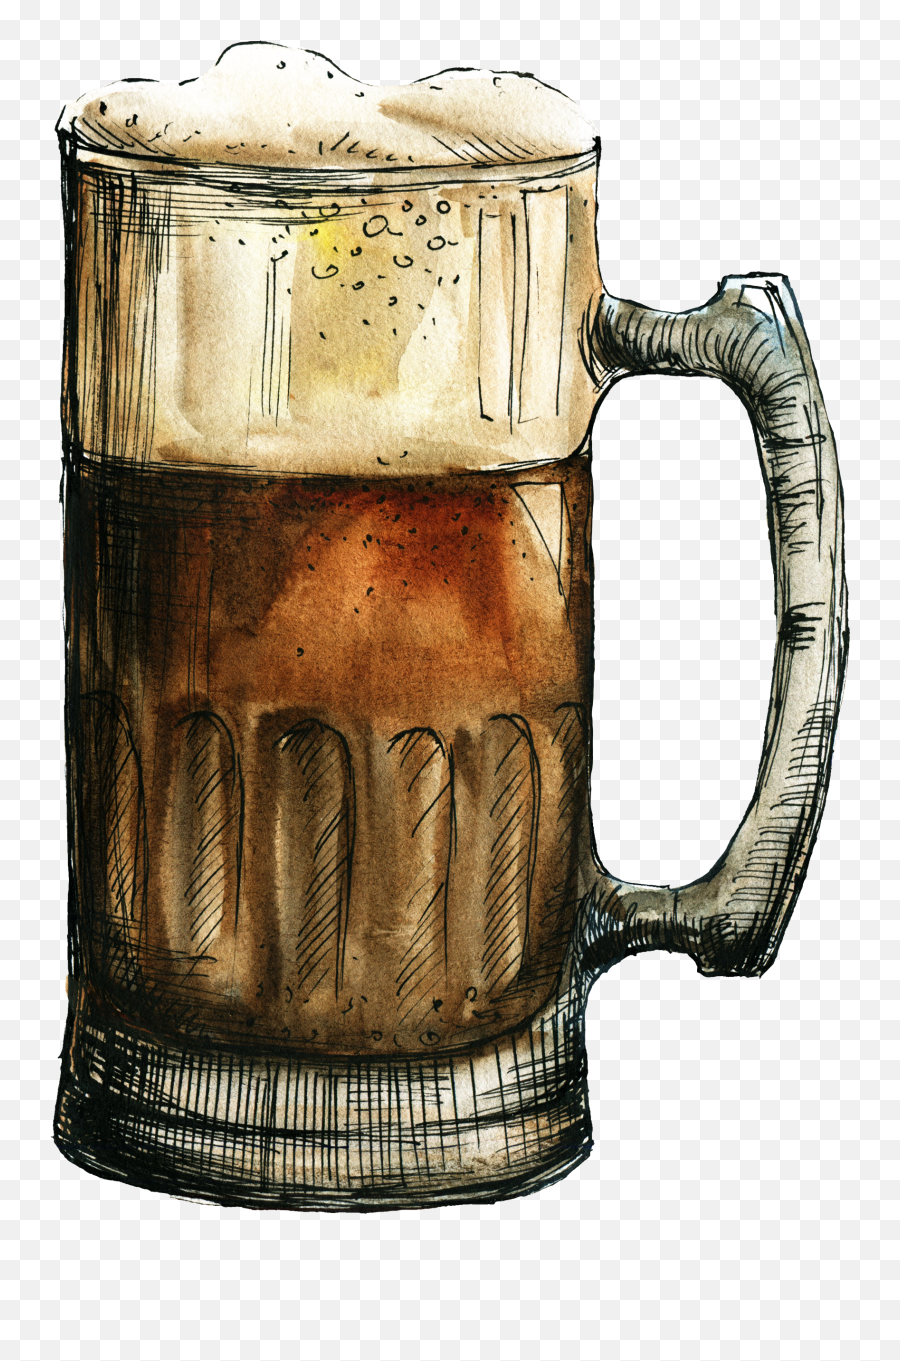 Download Tea Beer Draft Glassware Cup Hd Image Free Png